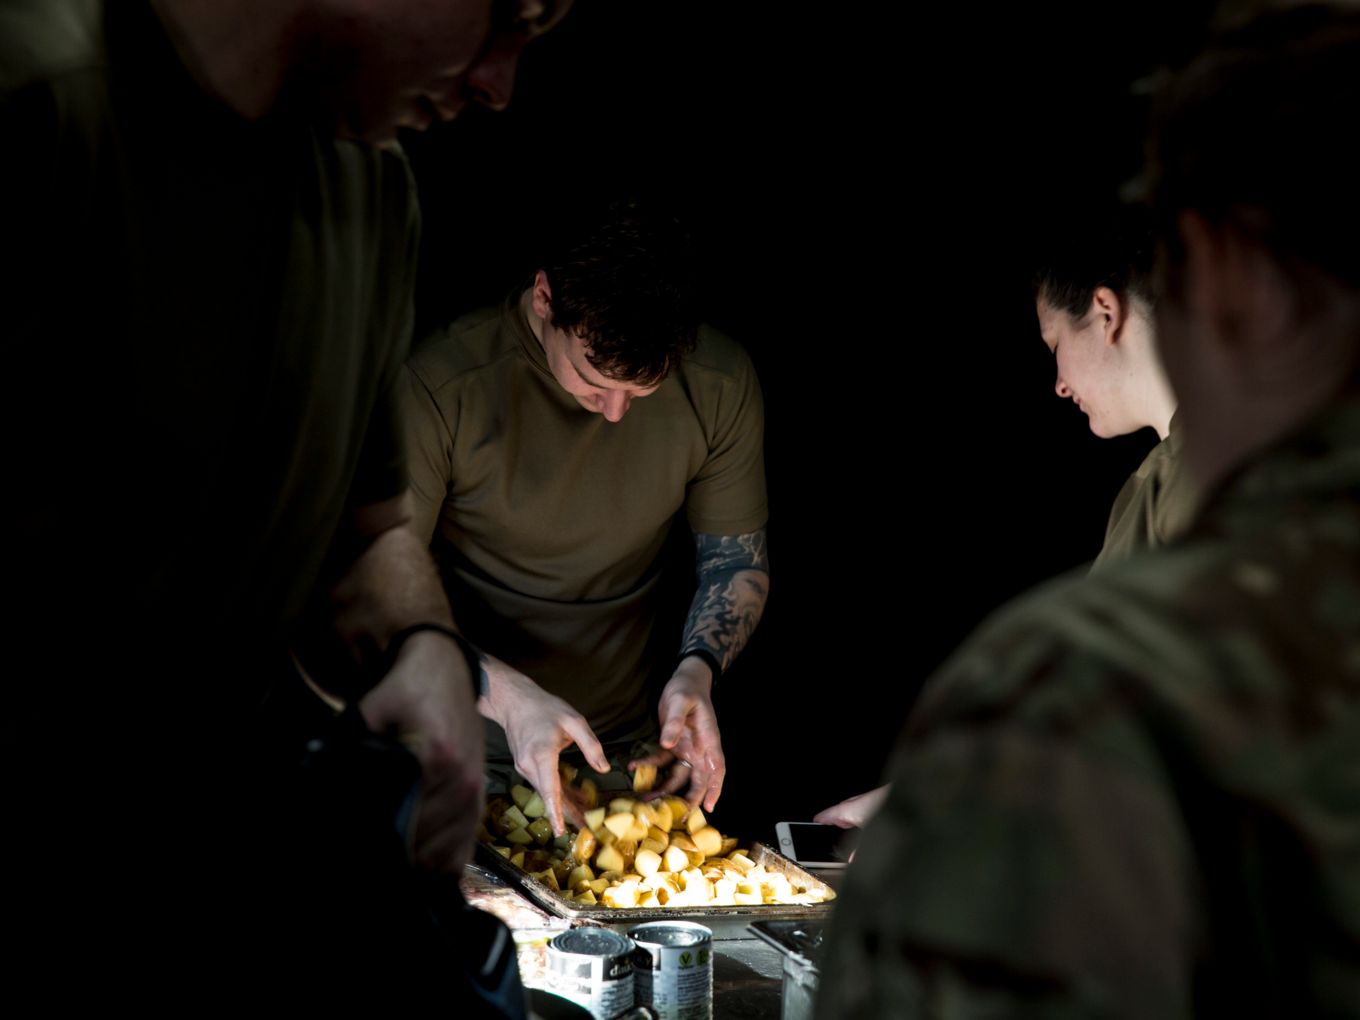 The trainees prepare roast potatoes